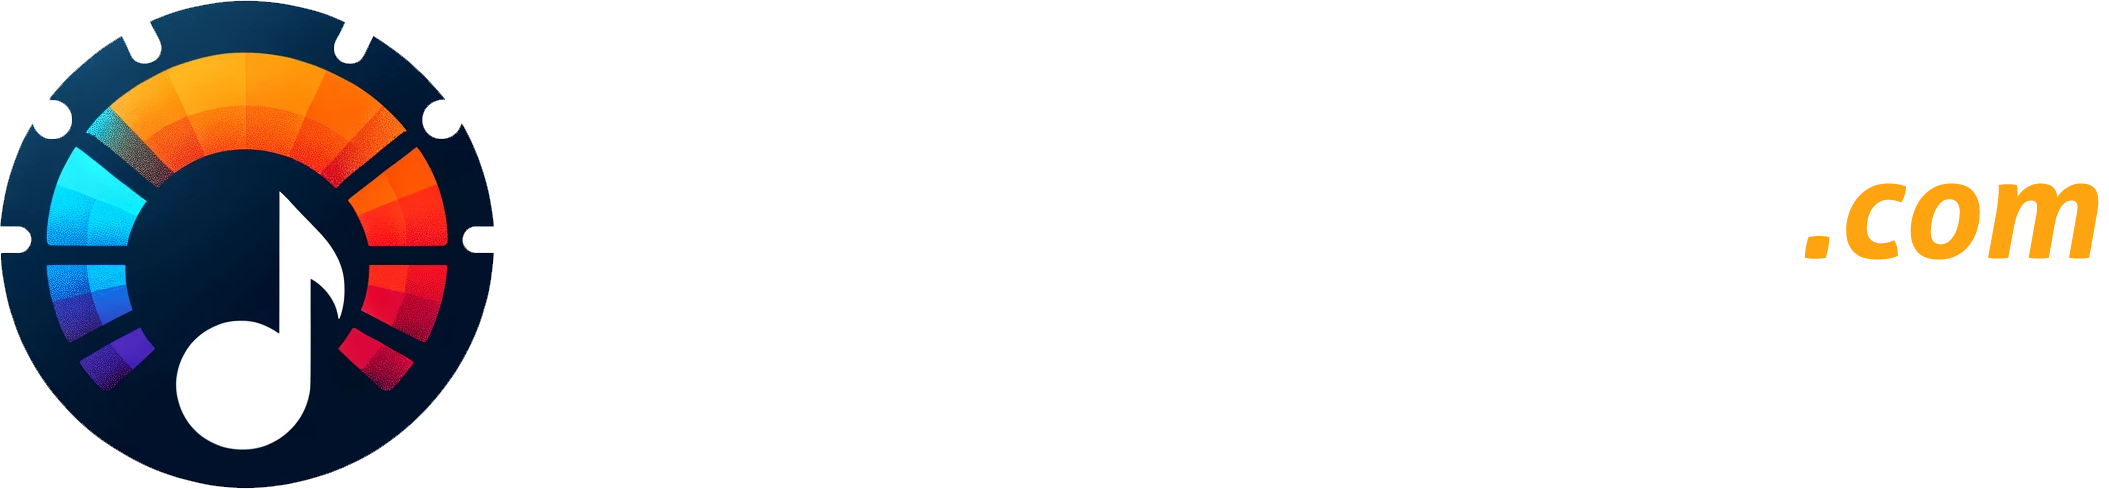 GrooveGauge.com - Music News & Reviews